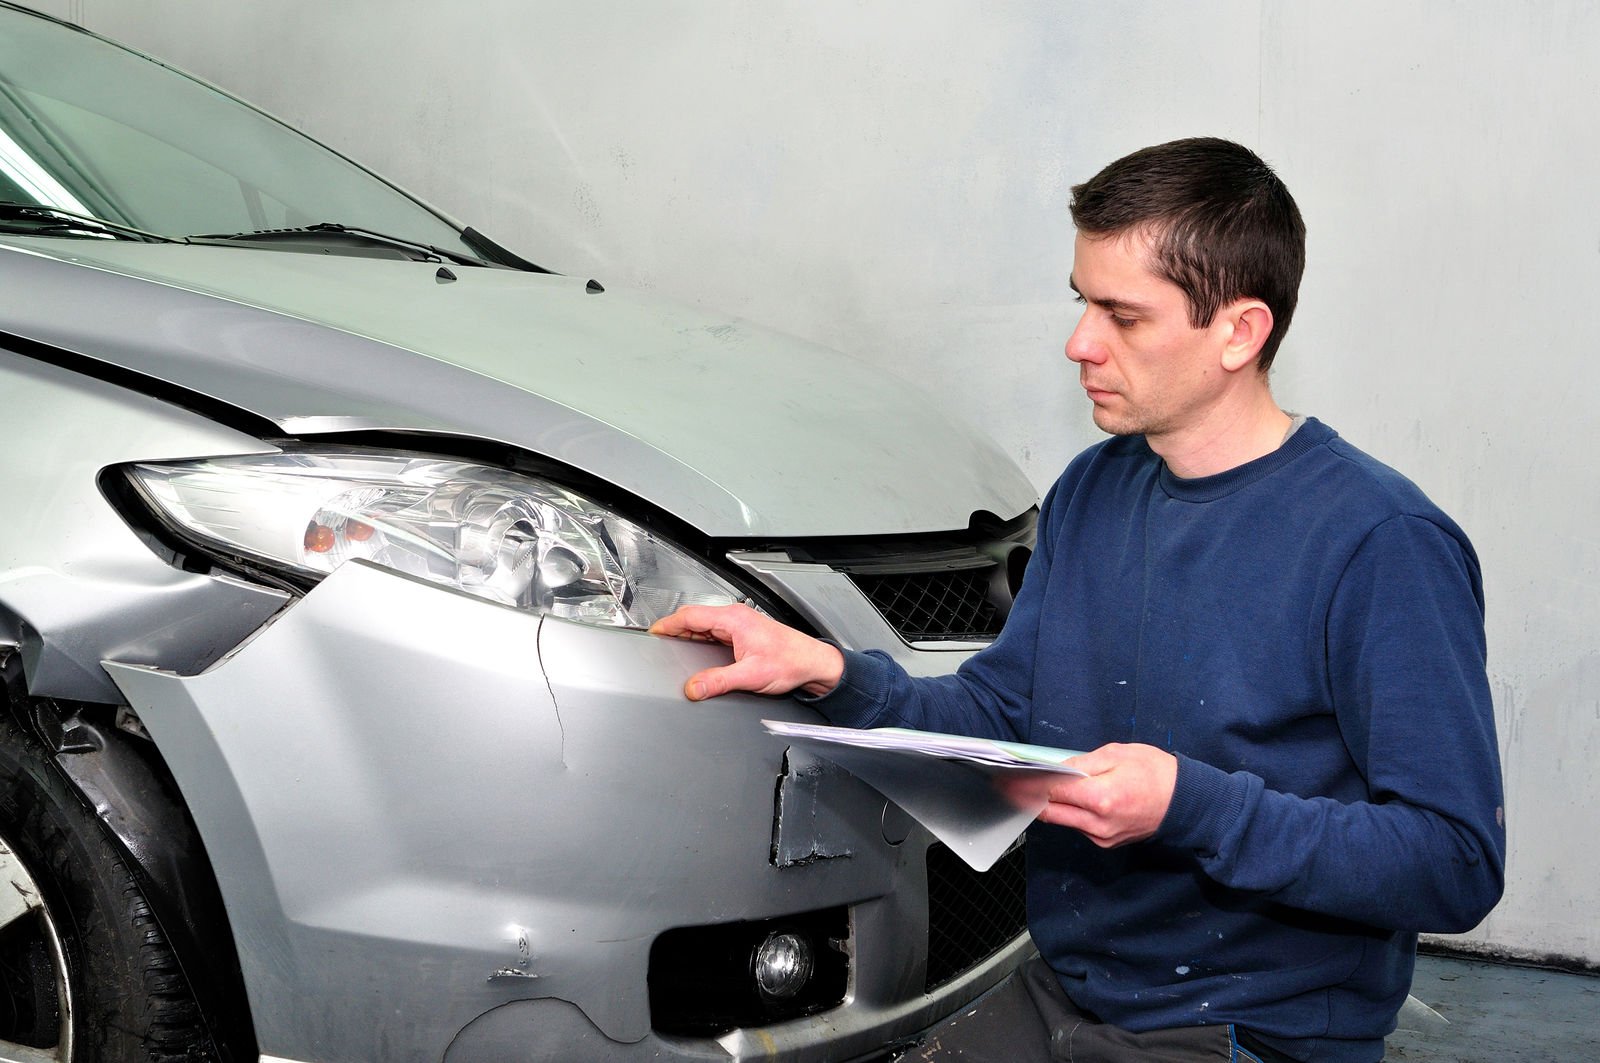 Does auto insurance cover bumper damage?